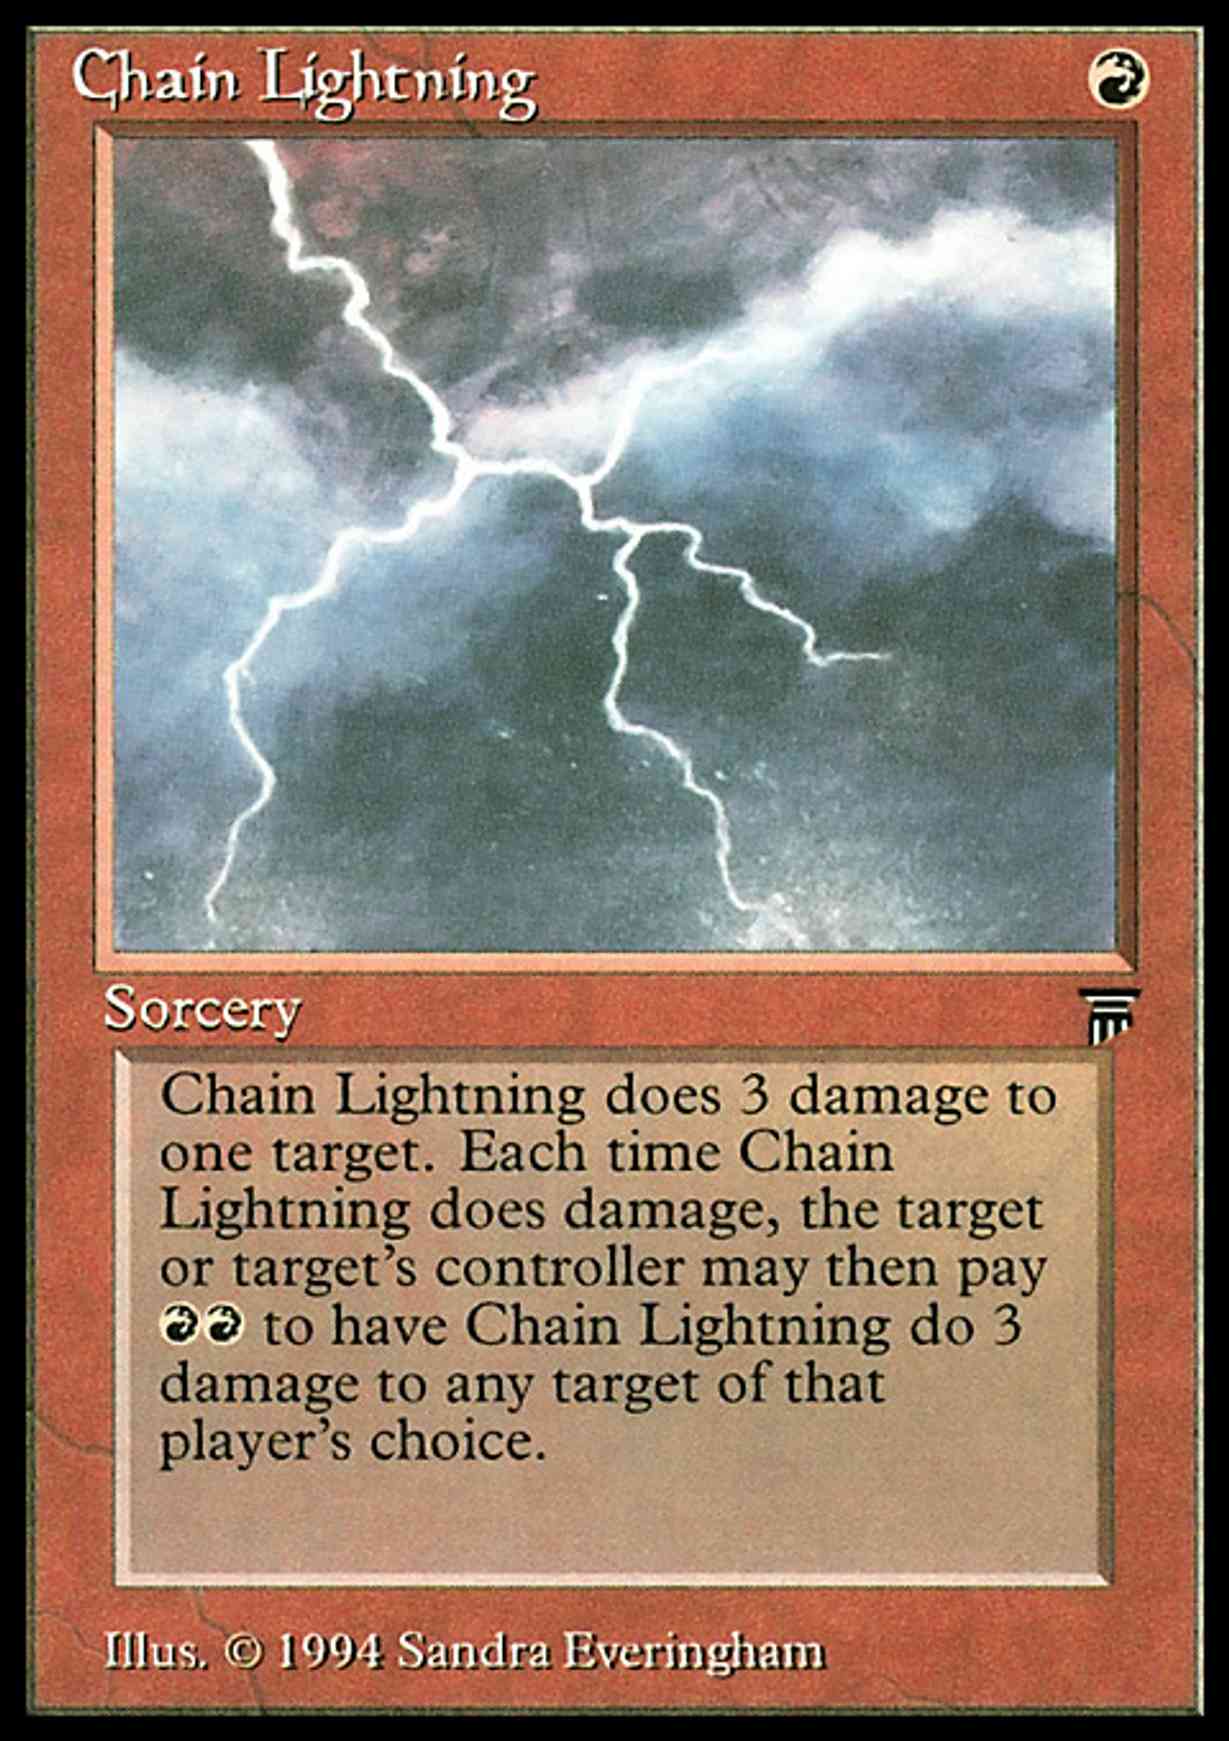 Chain Lightning magic card front